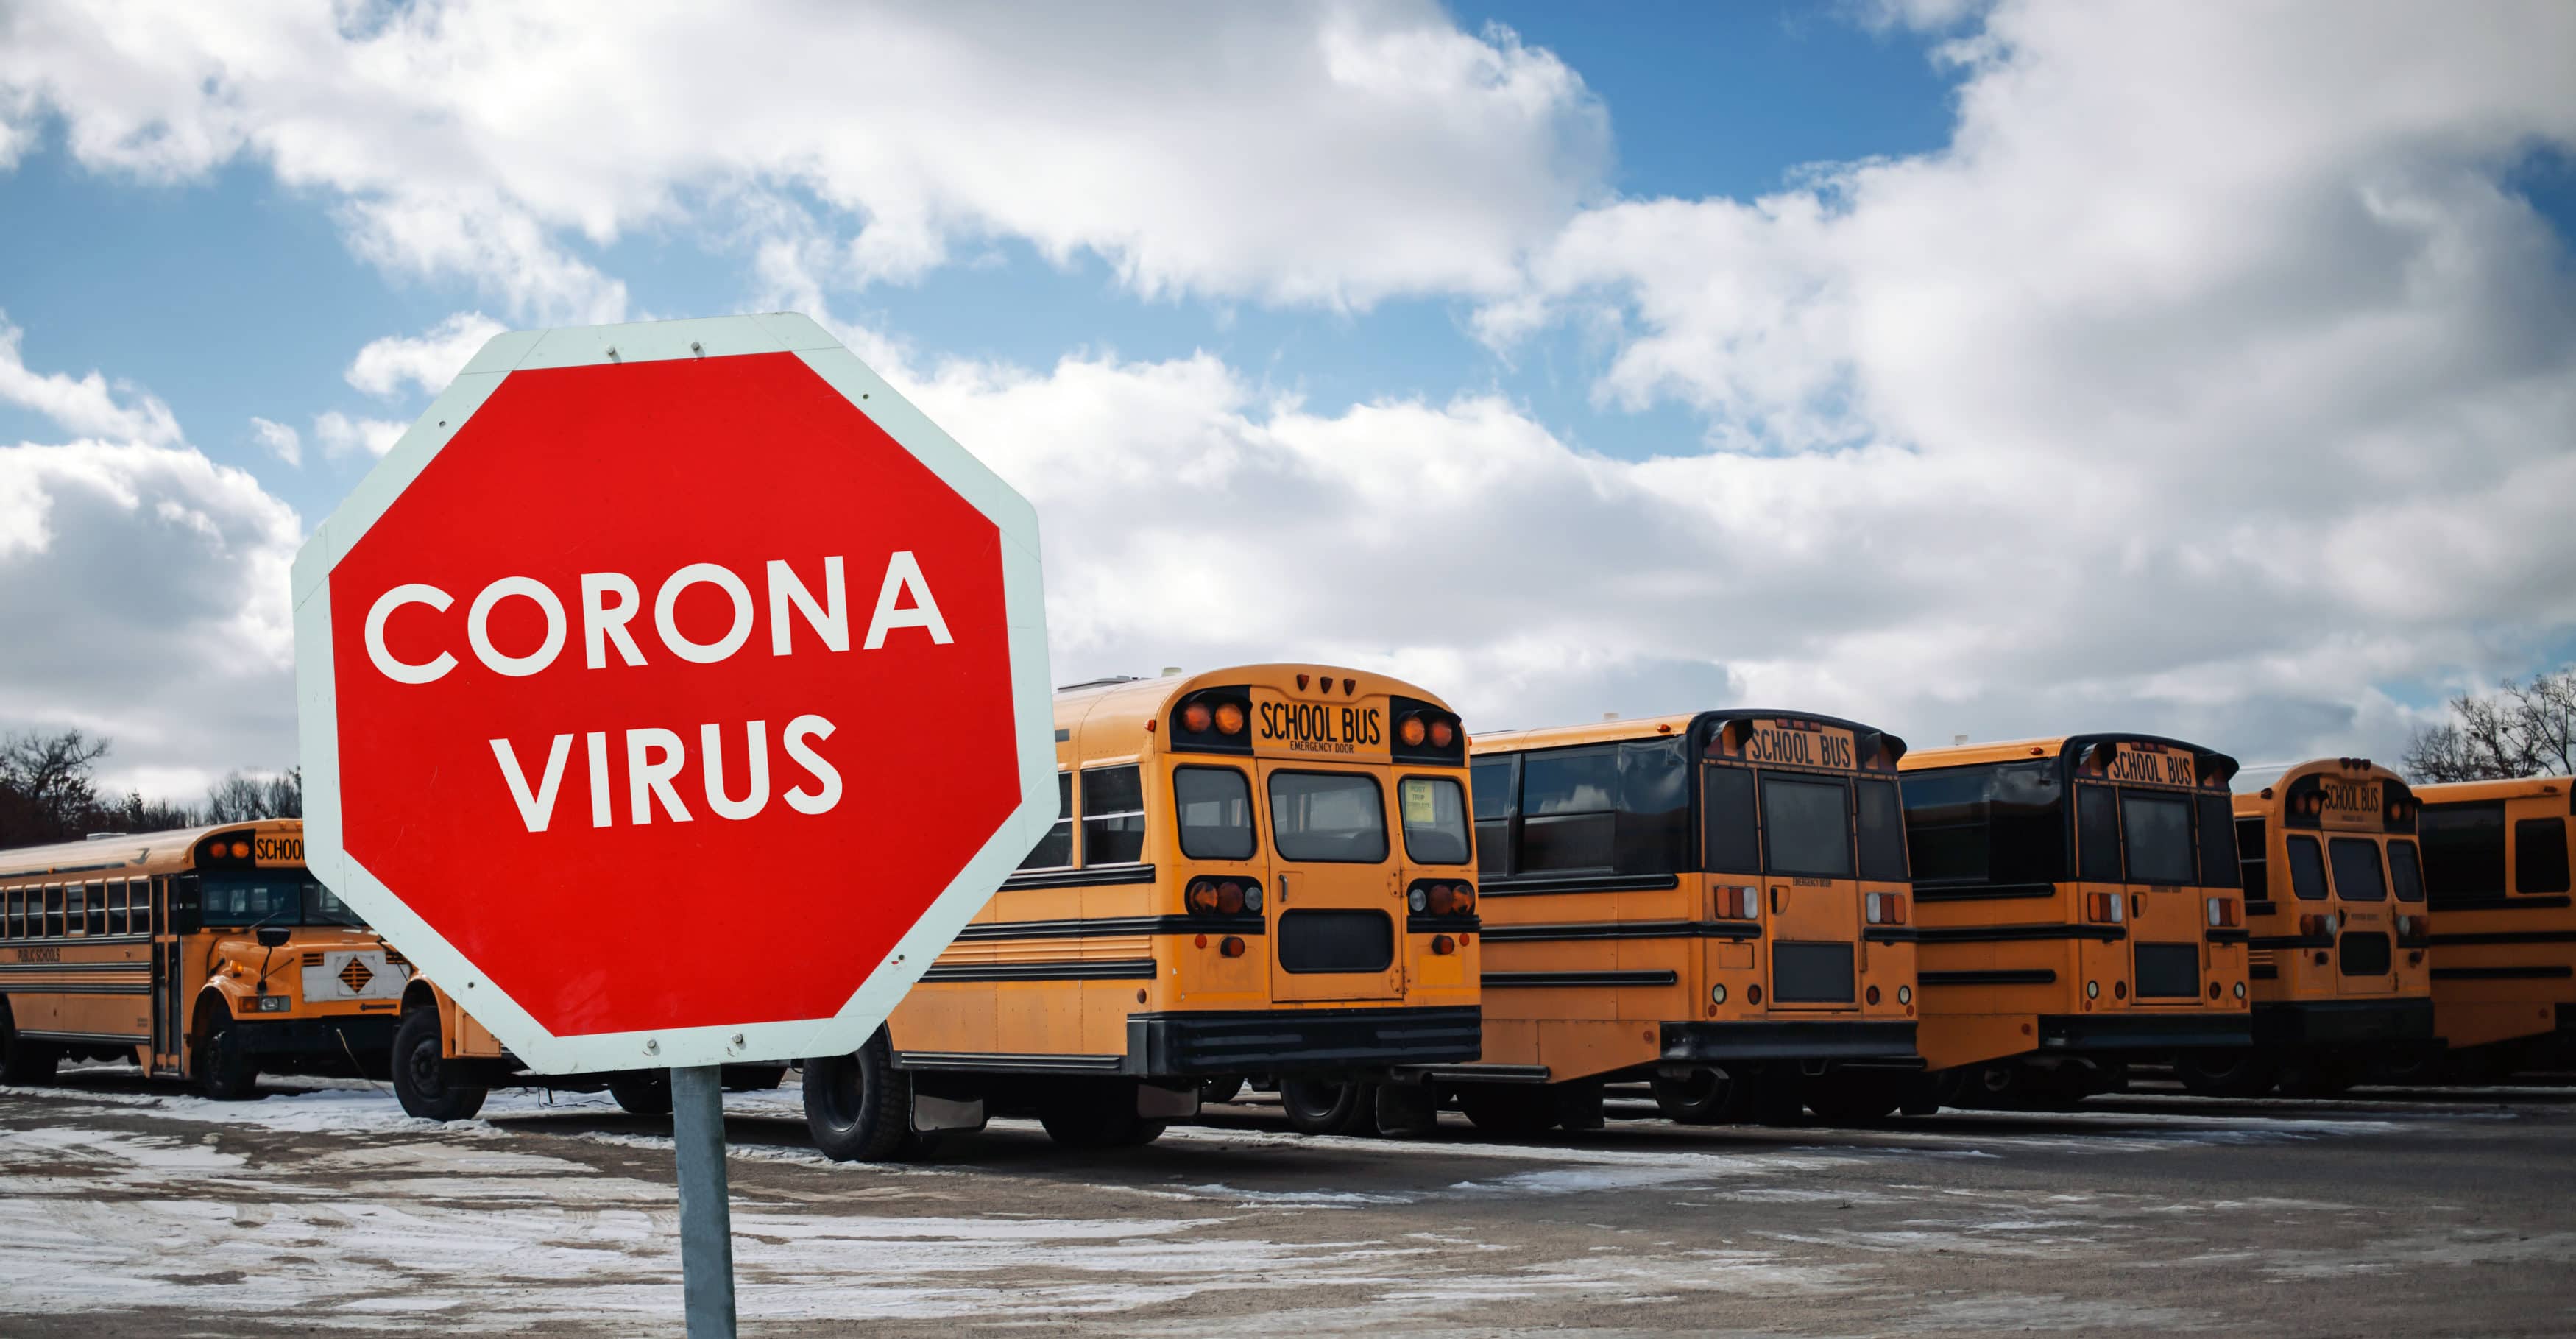 coronavirus-school-busses-3500x1819.jpeg